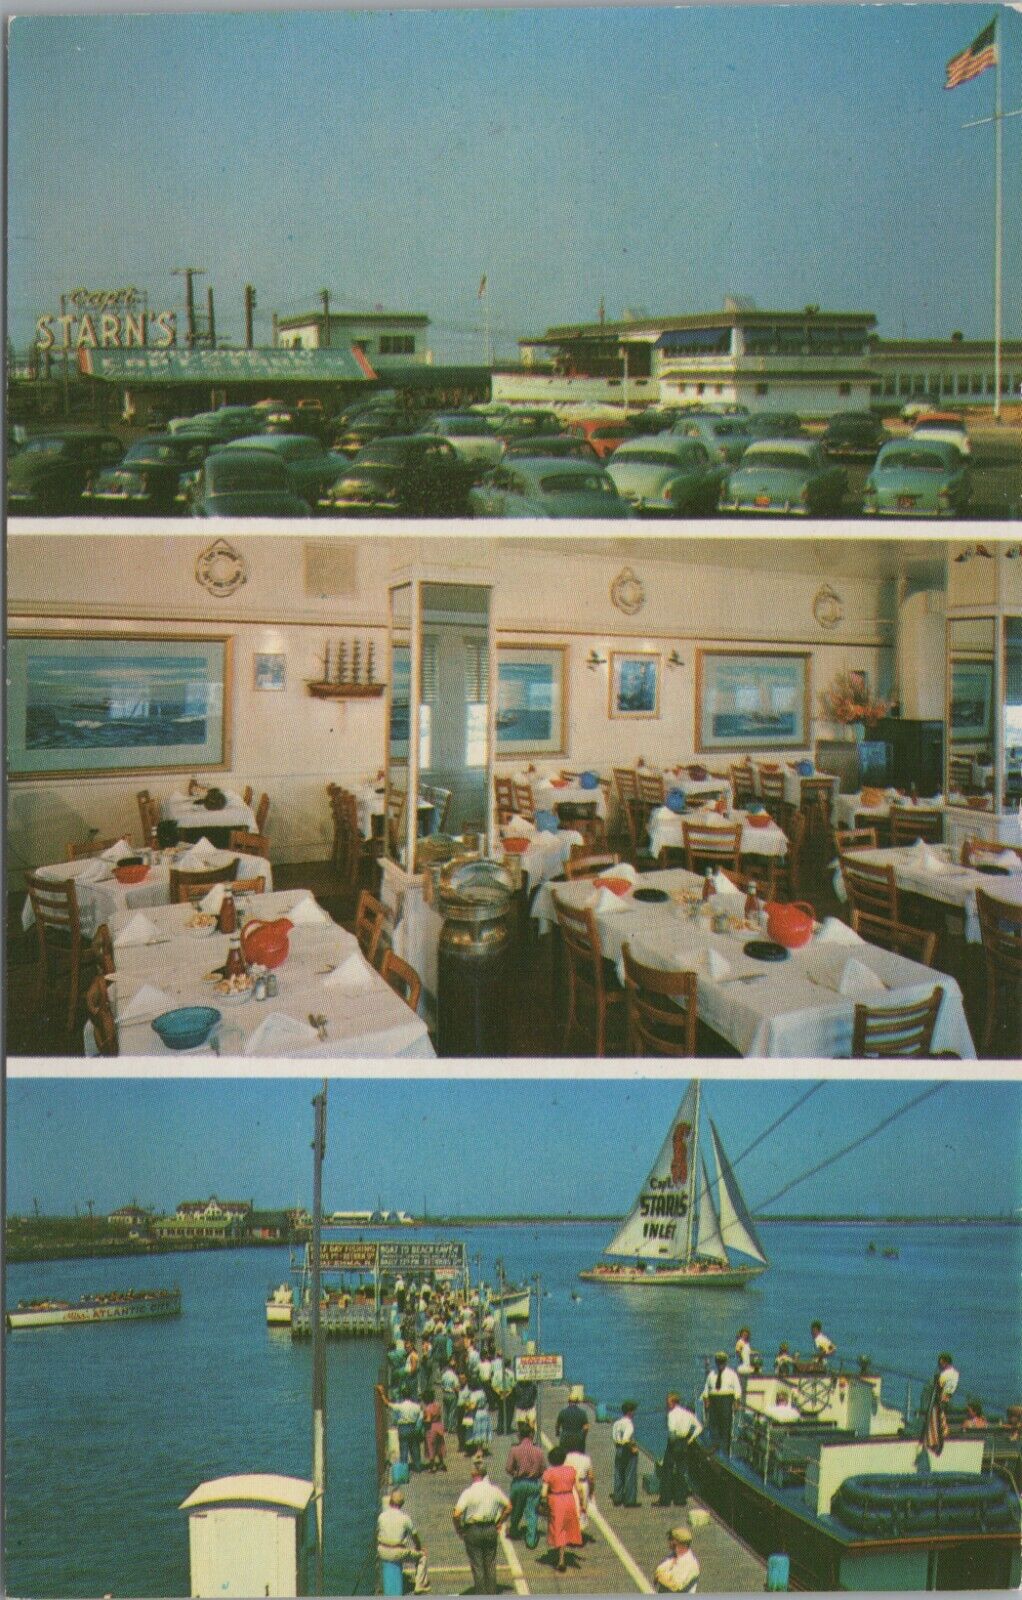 Captain Starn\'s Restaurant Boating Center Atlantic City NJ 3 views c1950s E692